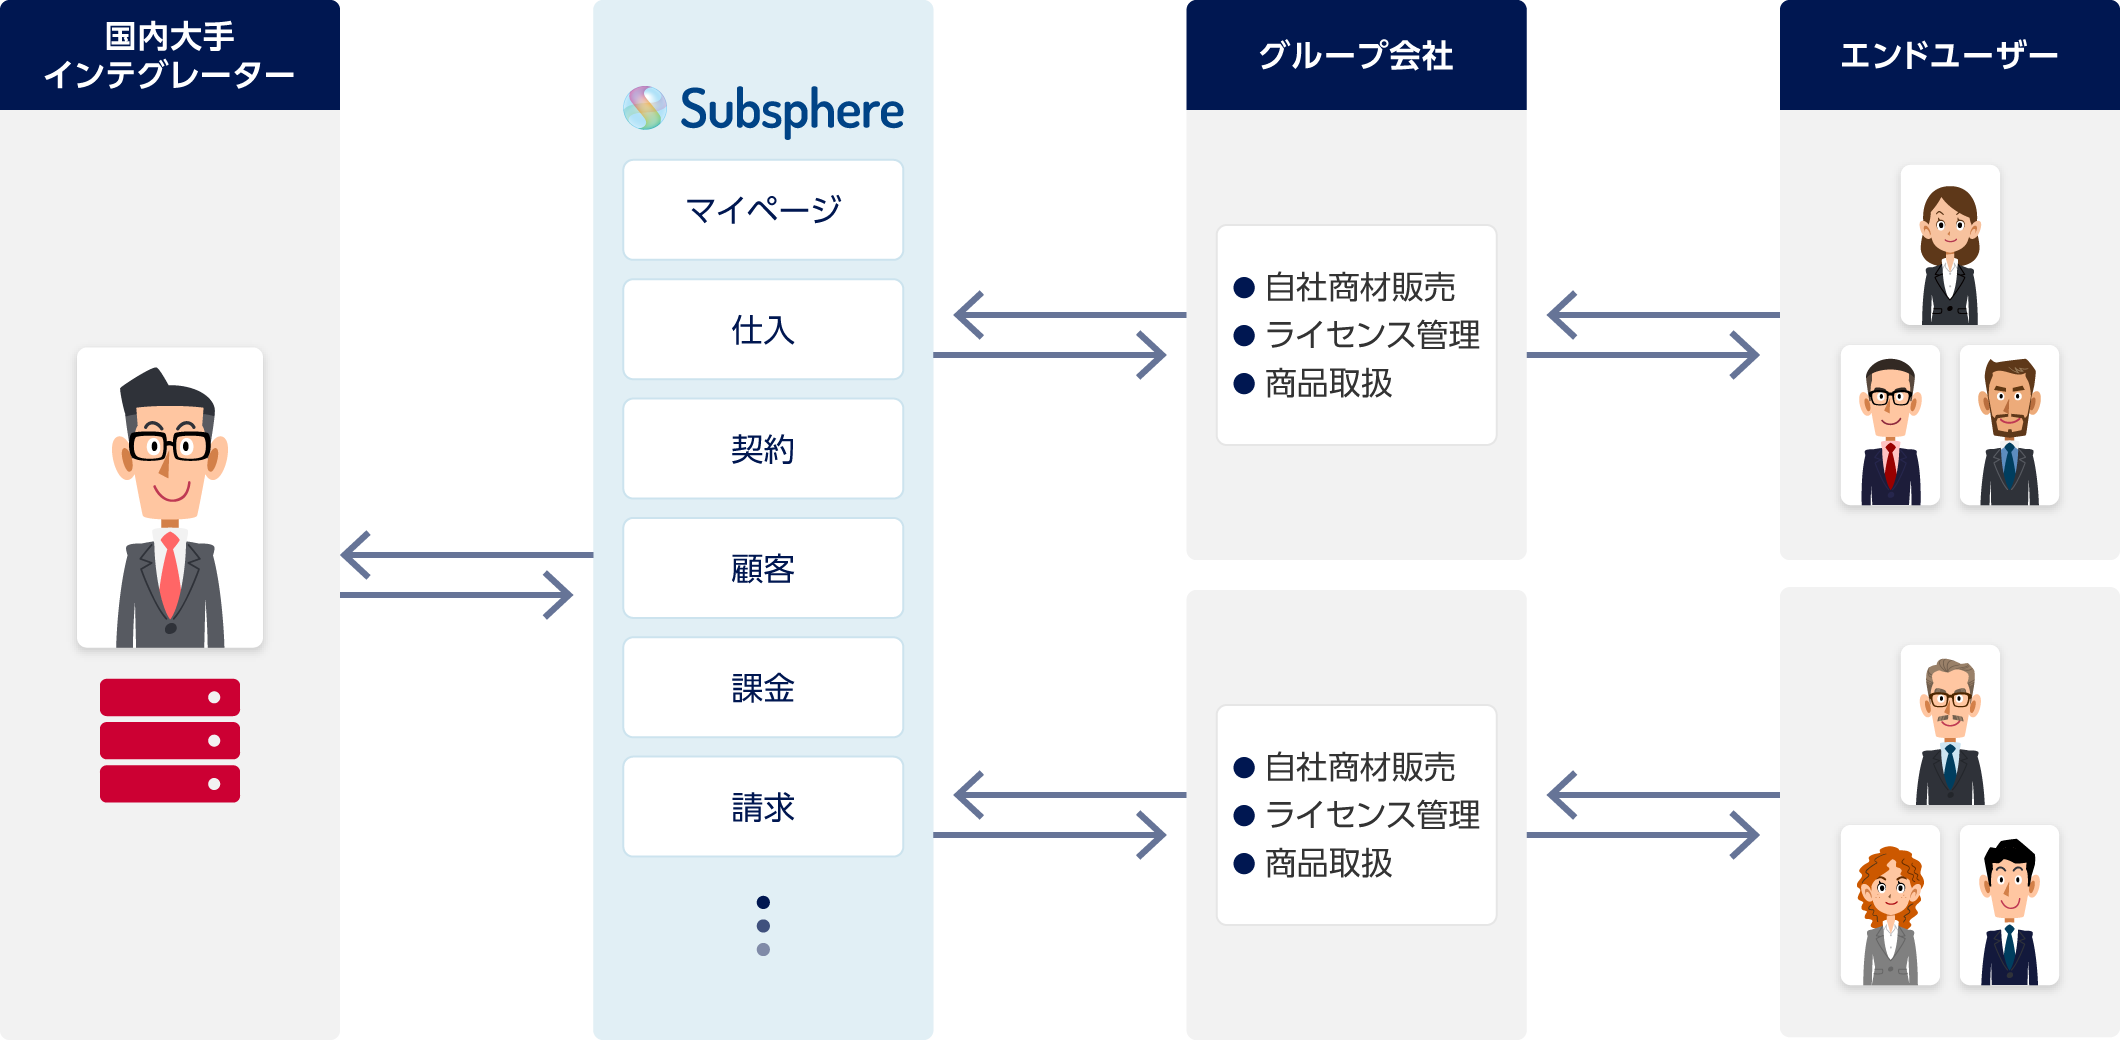 Subsphere（サブスフィア）で、マイページの提供、仕入・契約・顧客・課金・請求管理など。国内大手インテグレーターとグループ会社はSubsphere（サブスフィア）を利用。グループ会社は、自社商材販売・ライセンス管理・商品取扱。エンドユーザーはグループ会社と取引。